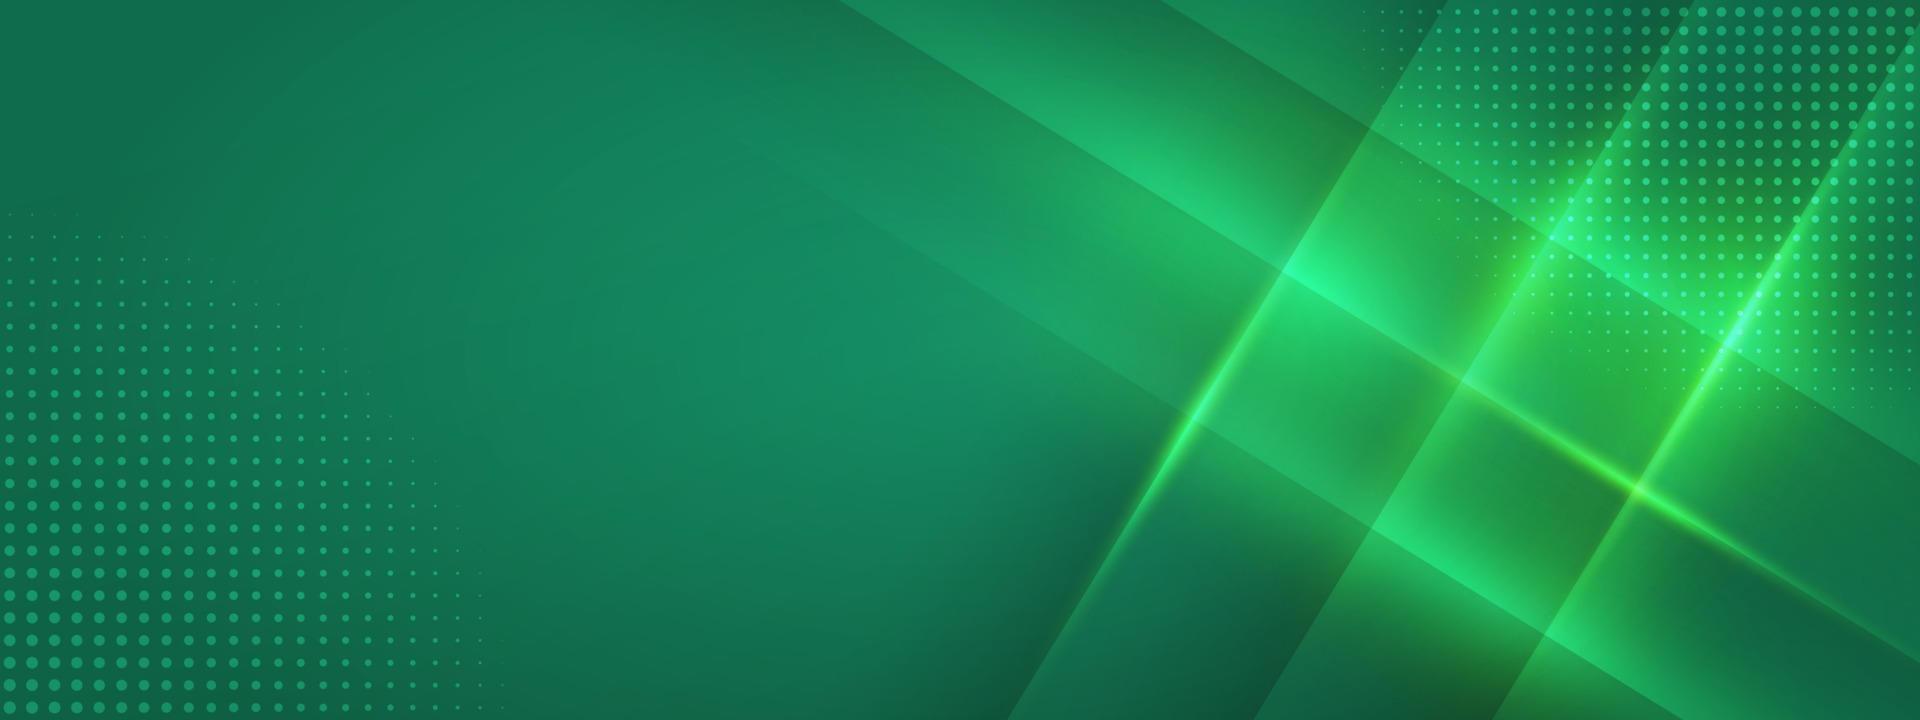 dark green Modern abstract vector background